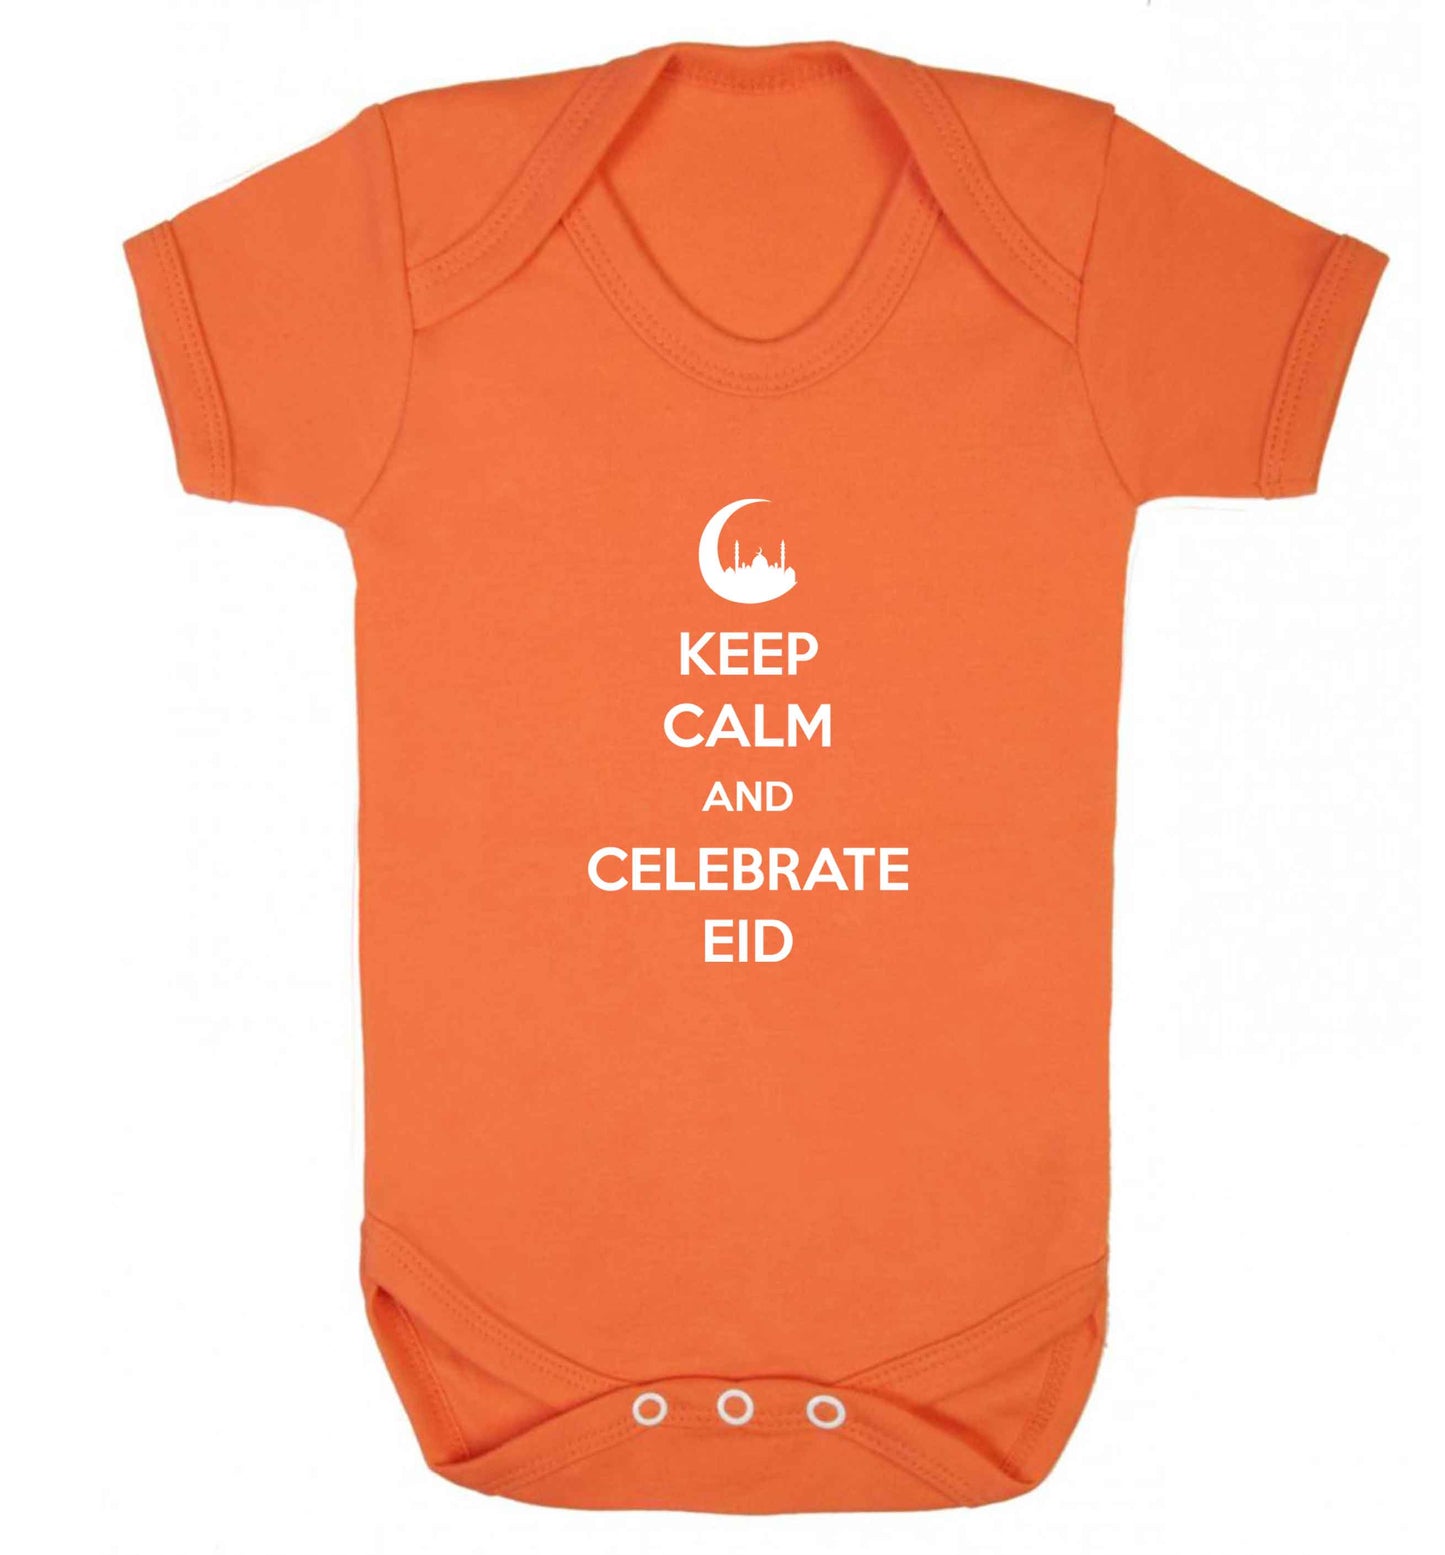 Keep calm and celebrate Eid baby vest orange 18-24 months